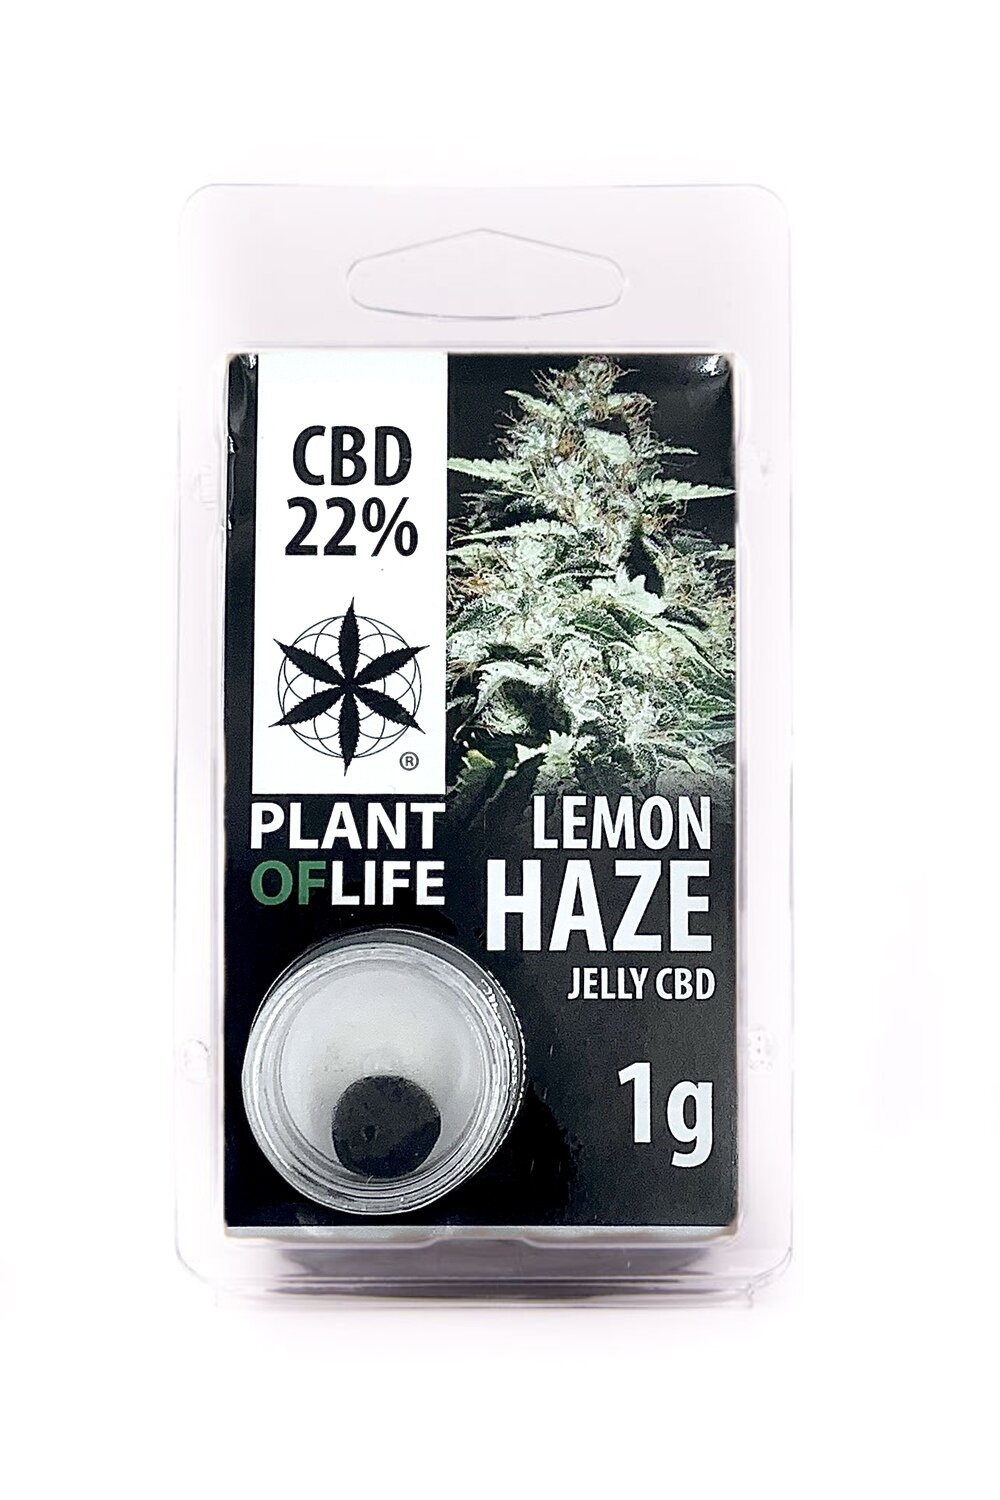 Résine Lemon Haze 1 G Plant of life 22% CBD